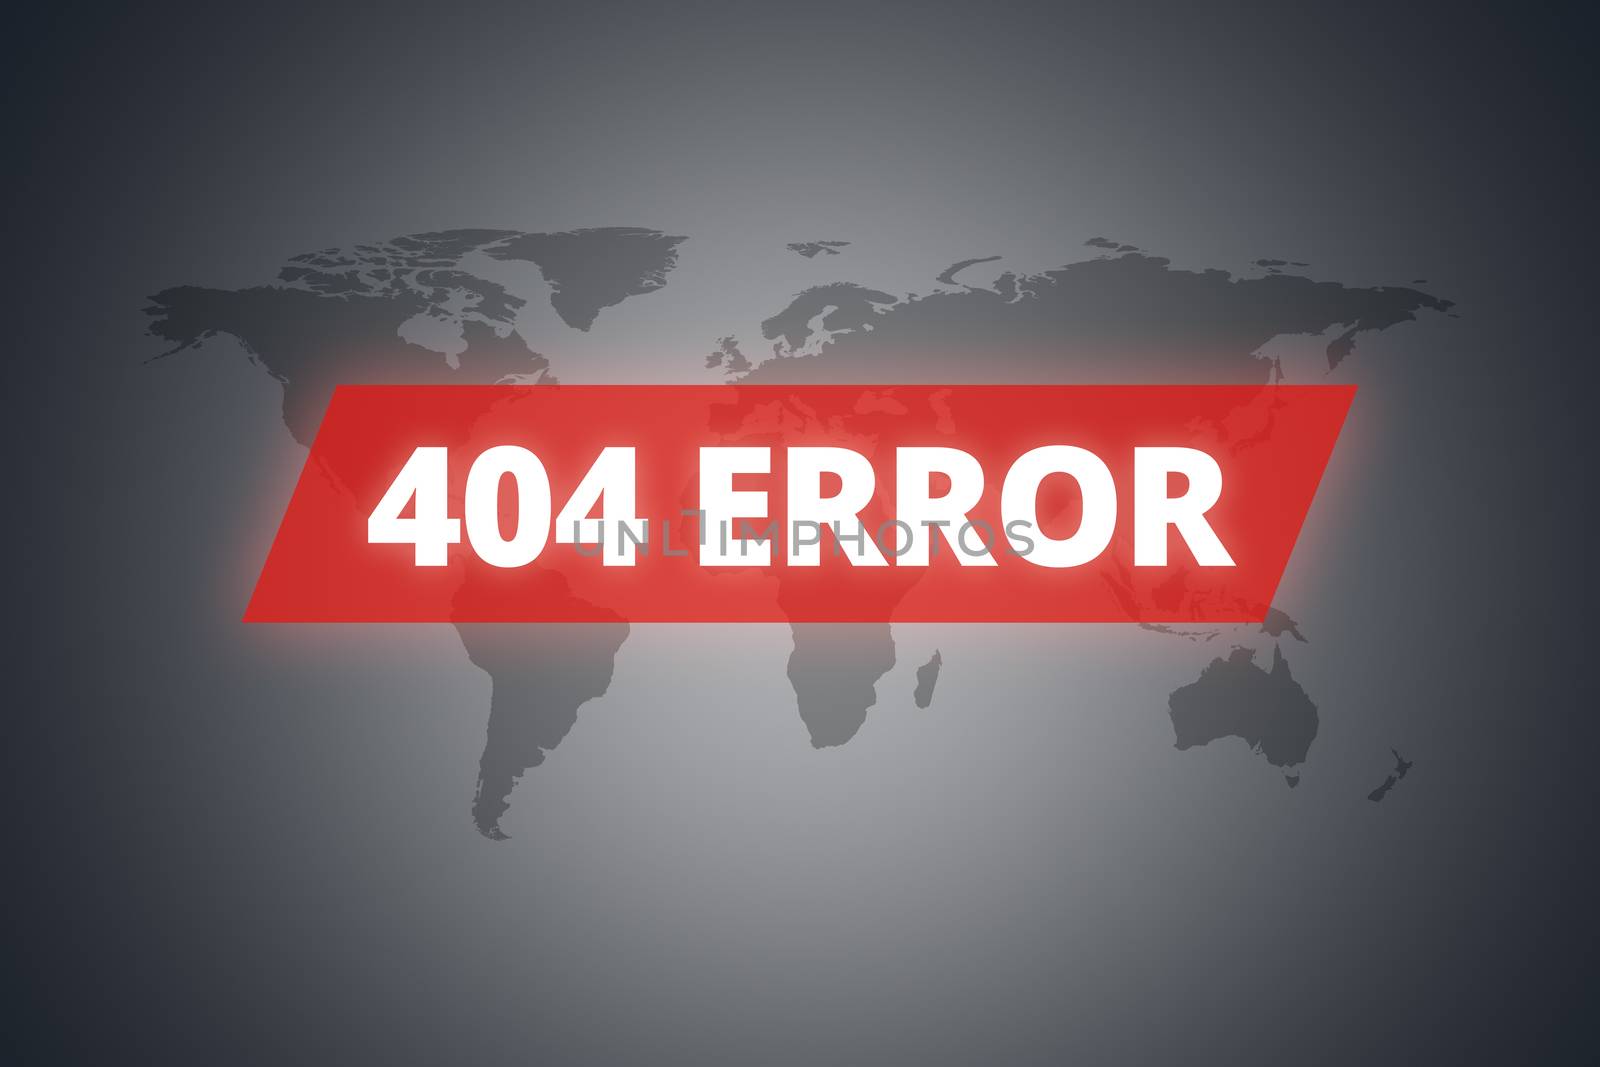 404 Error Message on Screen by niglaynike